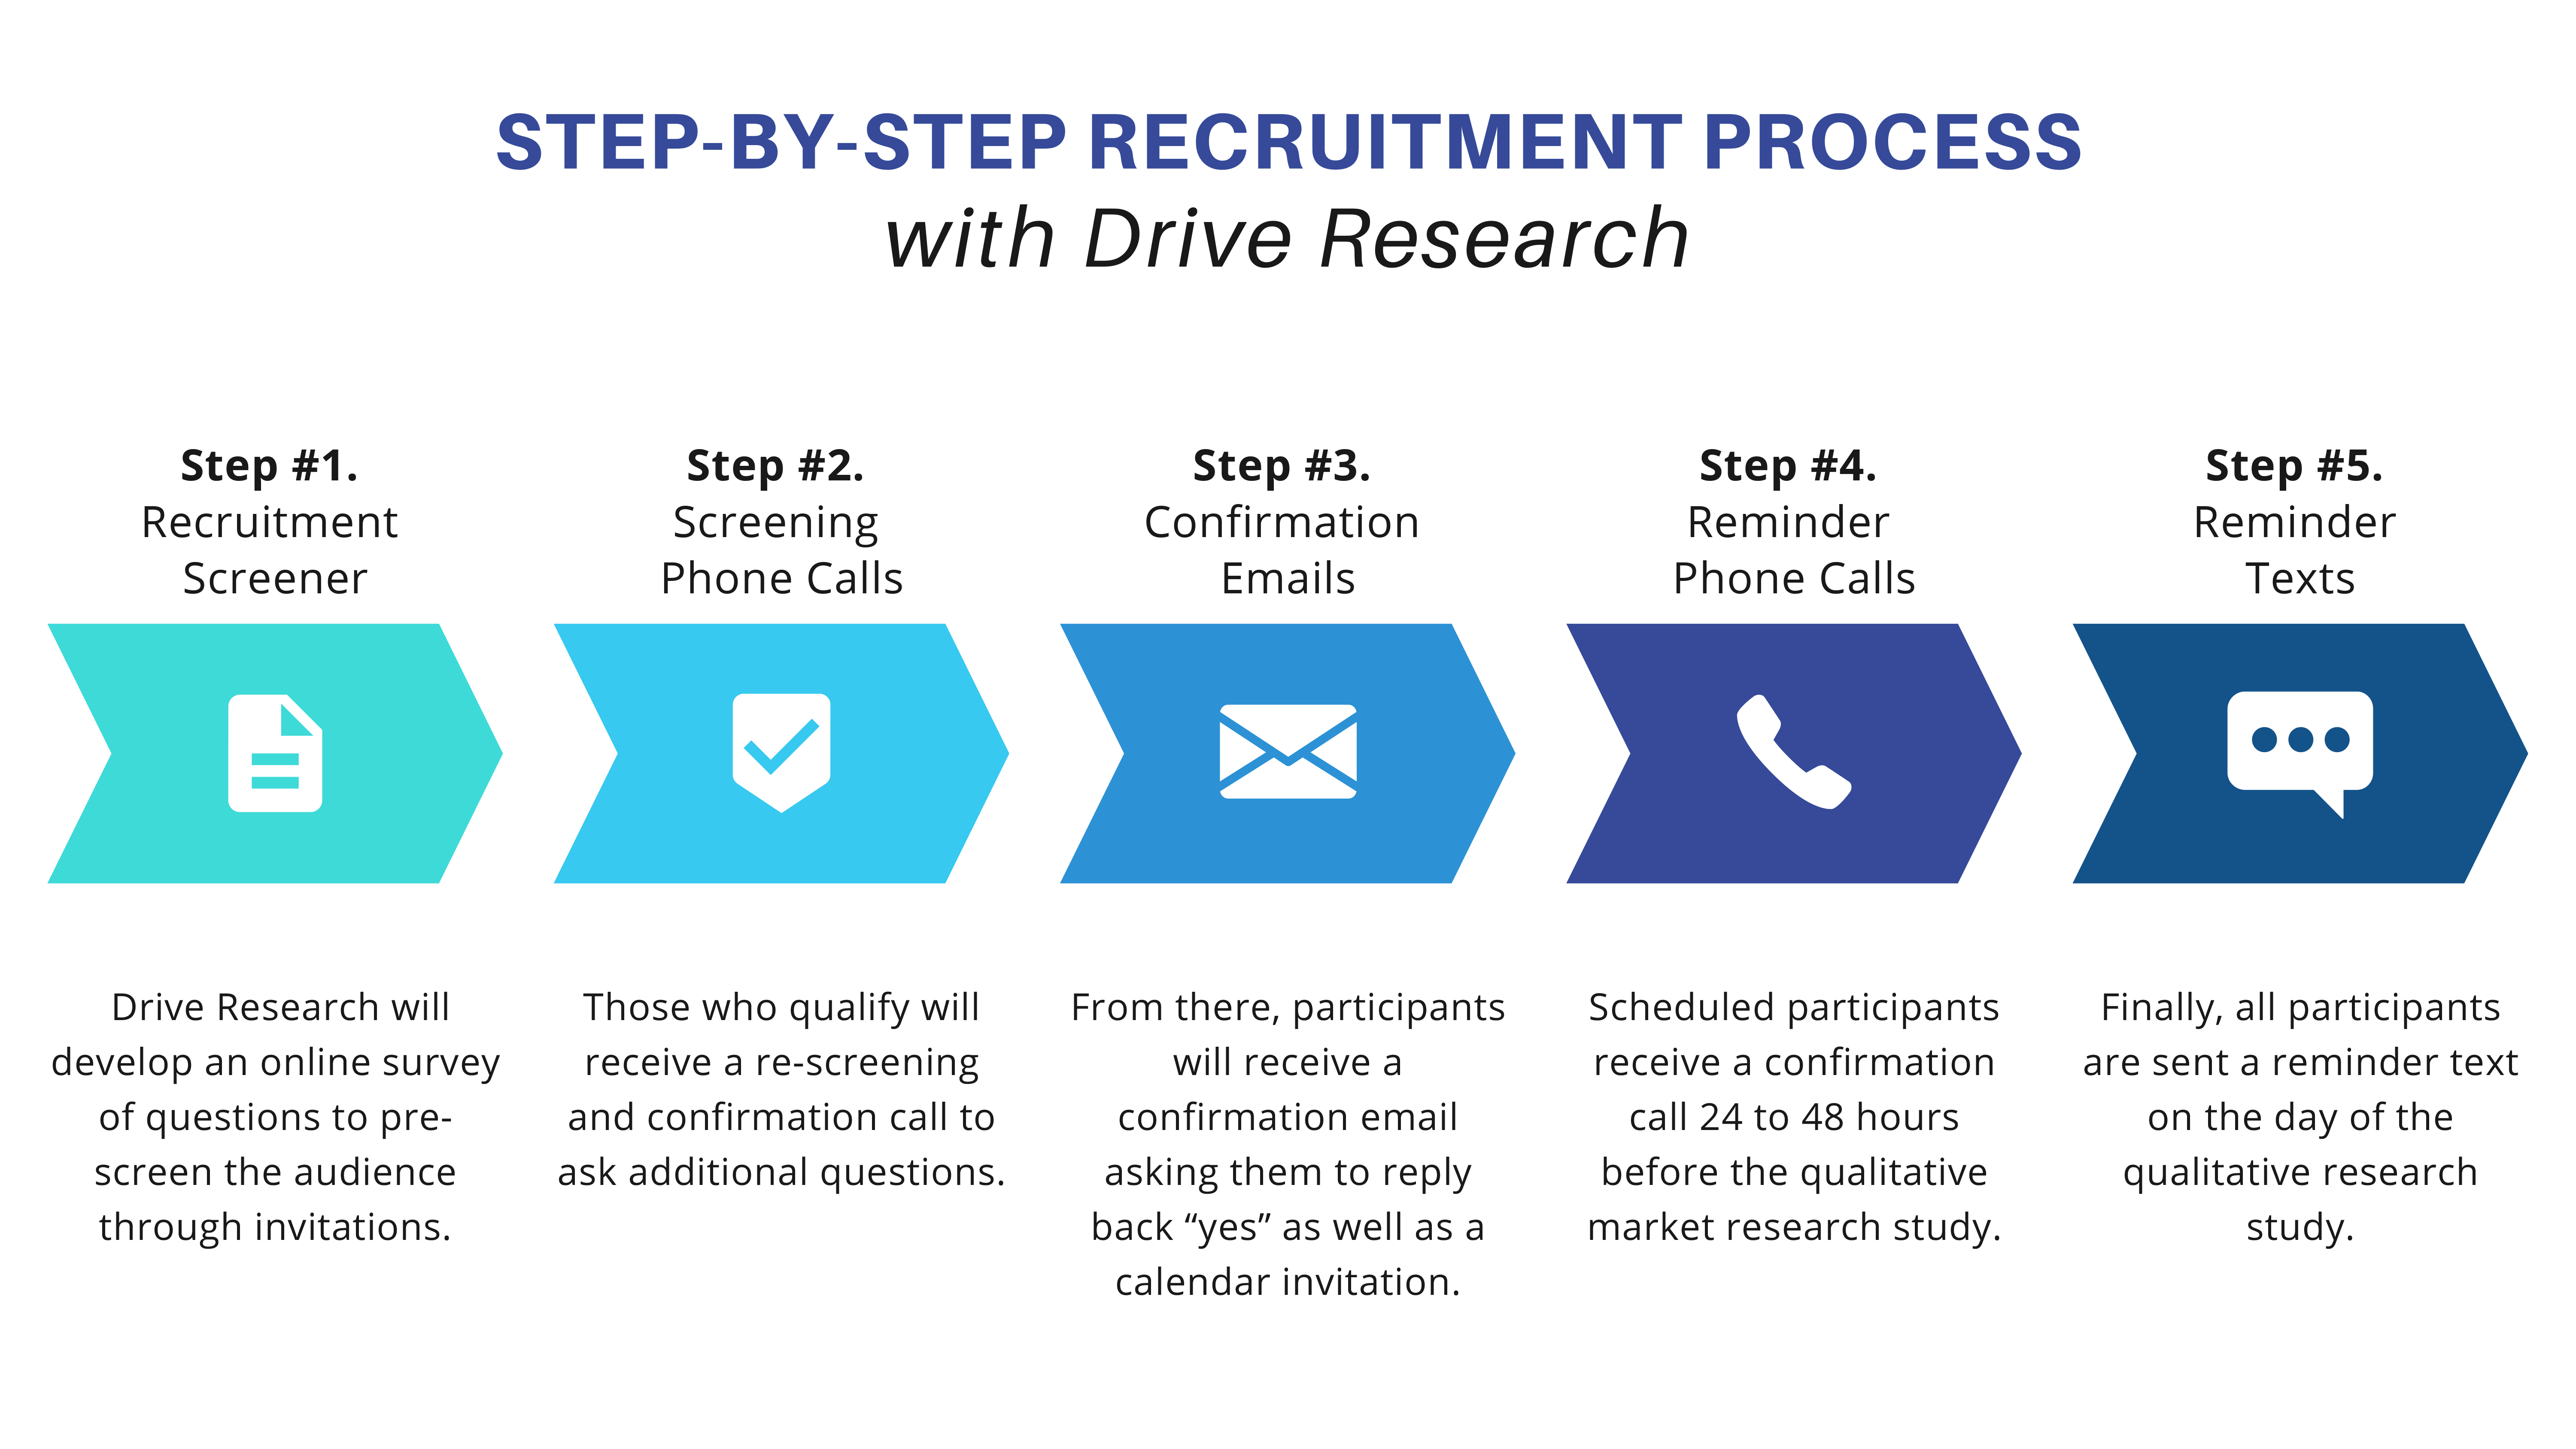 b2b market research recruitment process - drive research